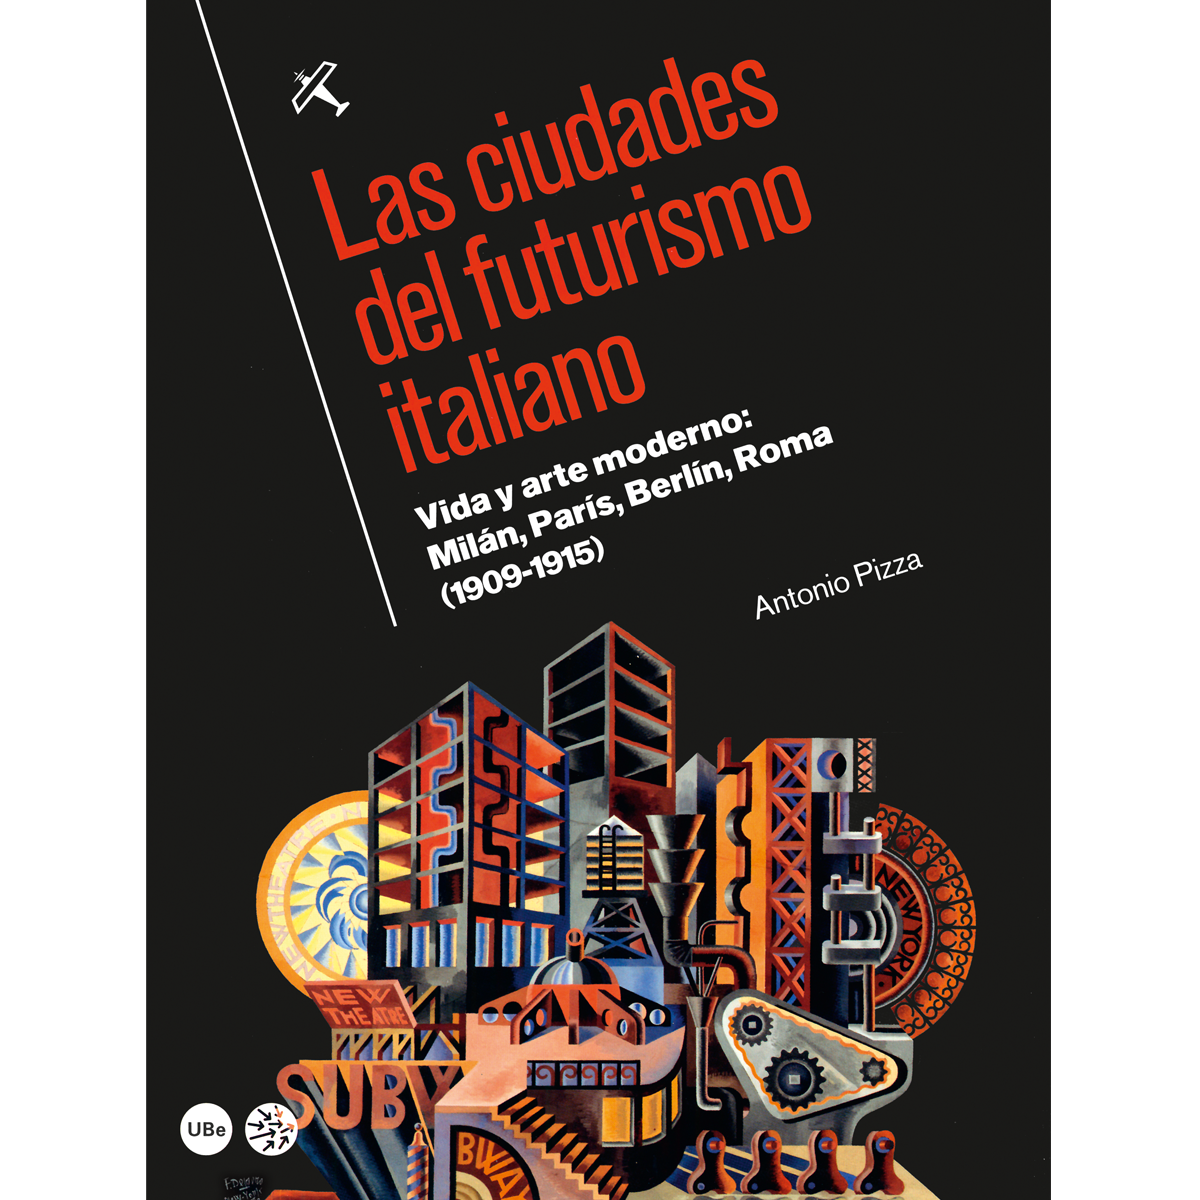 Las ciudades del futurismo italiano